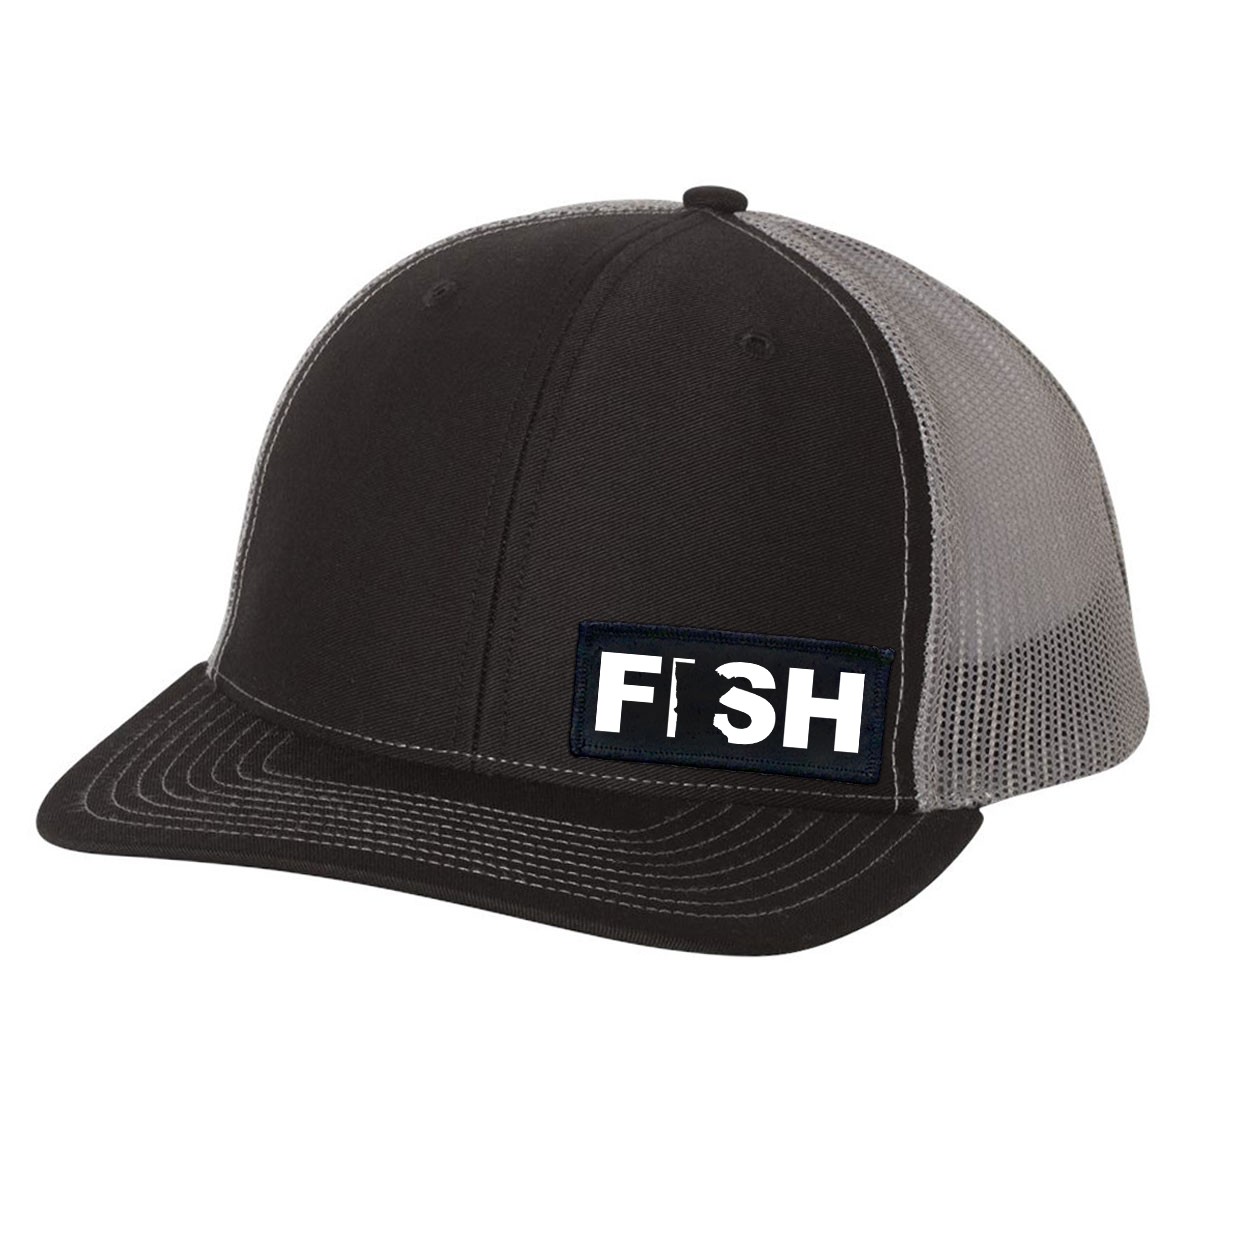 Fish Minnesota Night Out Woven Patch Snapback Trucker Hat Black/Gray (White Logo)